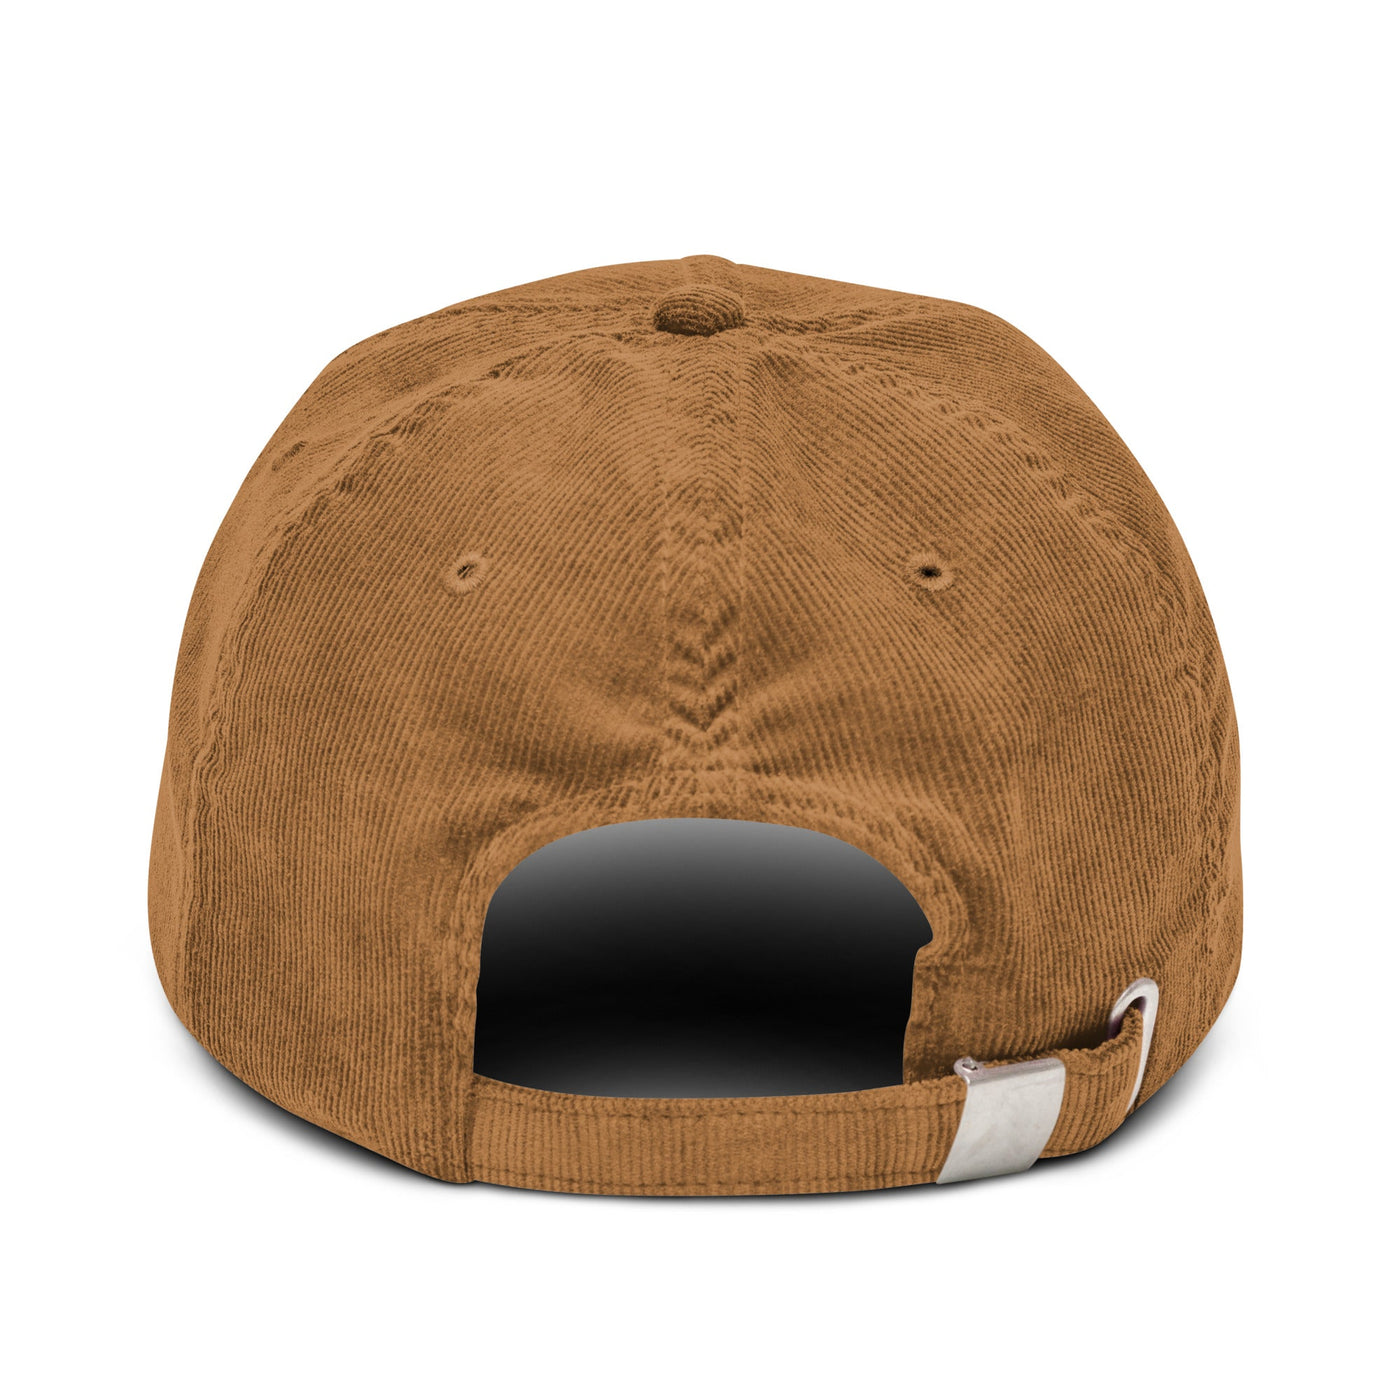 Ramen Bowl Corduroy hat - Camel - - Just Another Cap Store